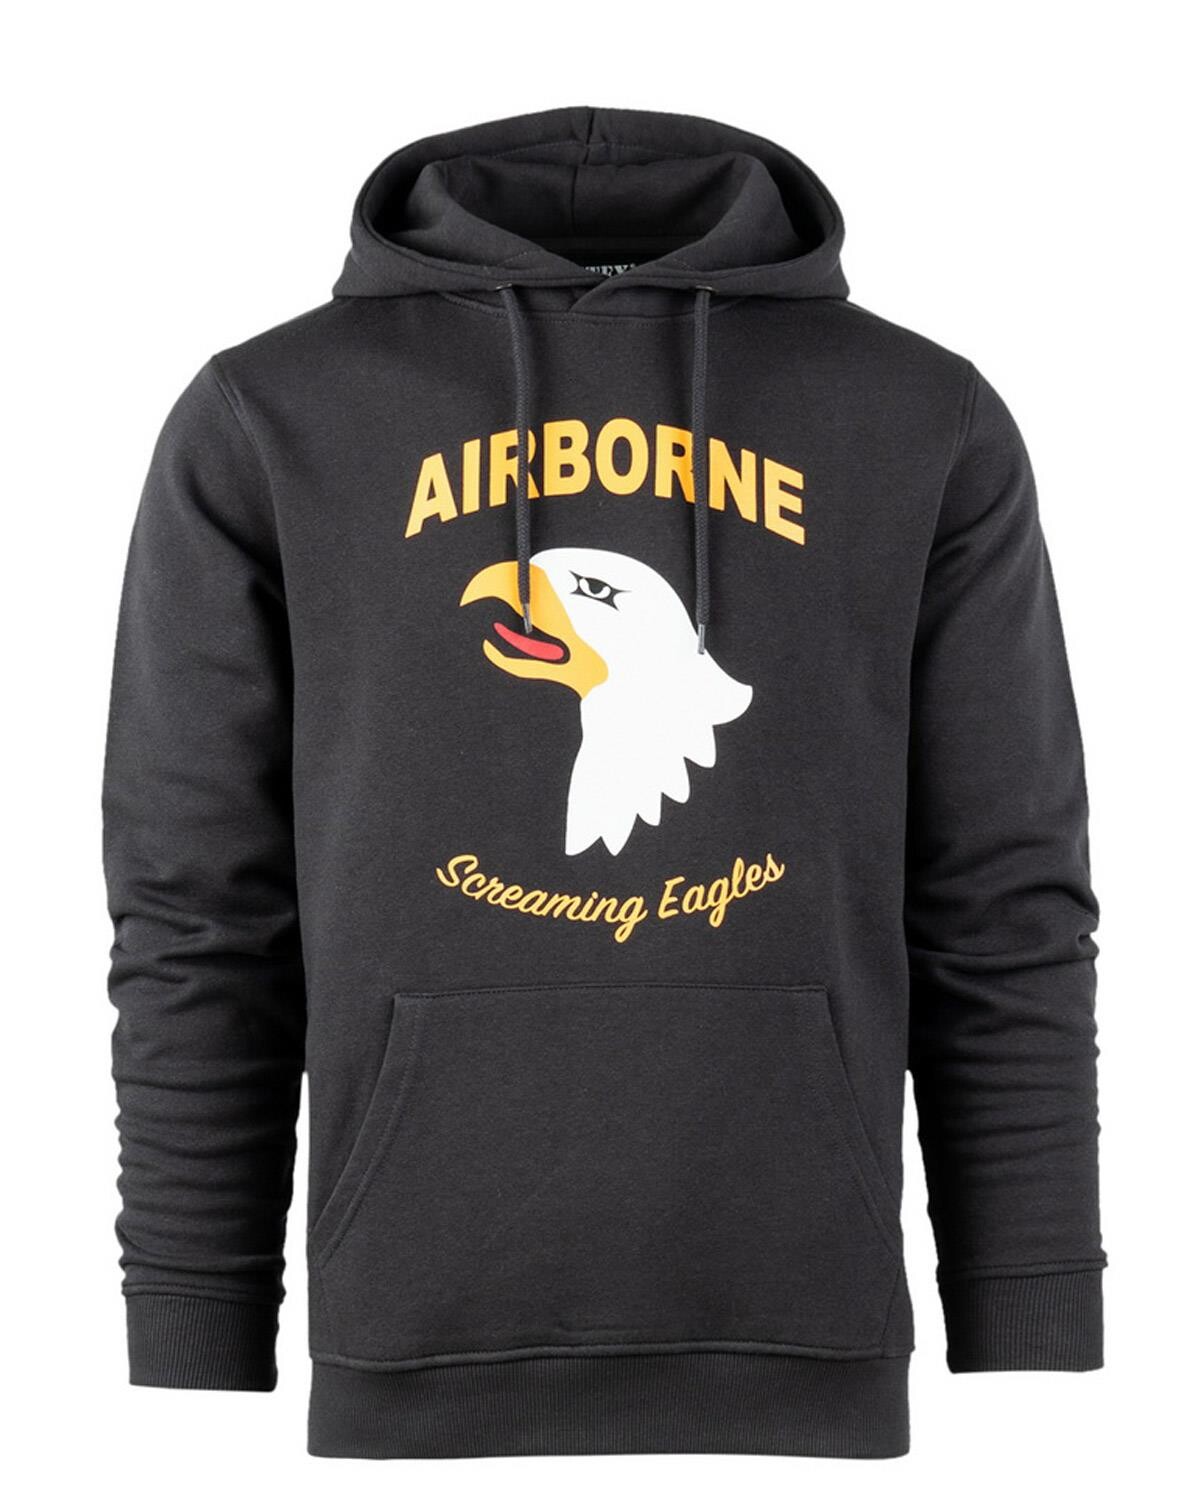 Fostex Hoodie 101 St Airborne Eagle (Mørkegrå, 3XL)